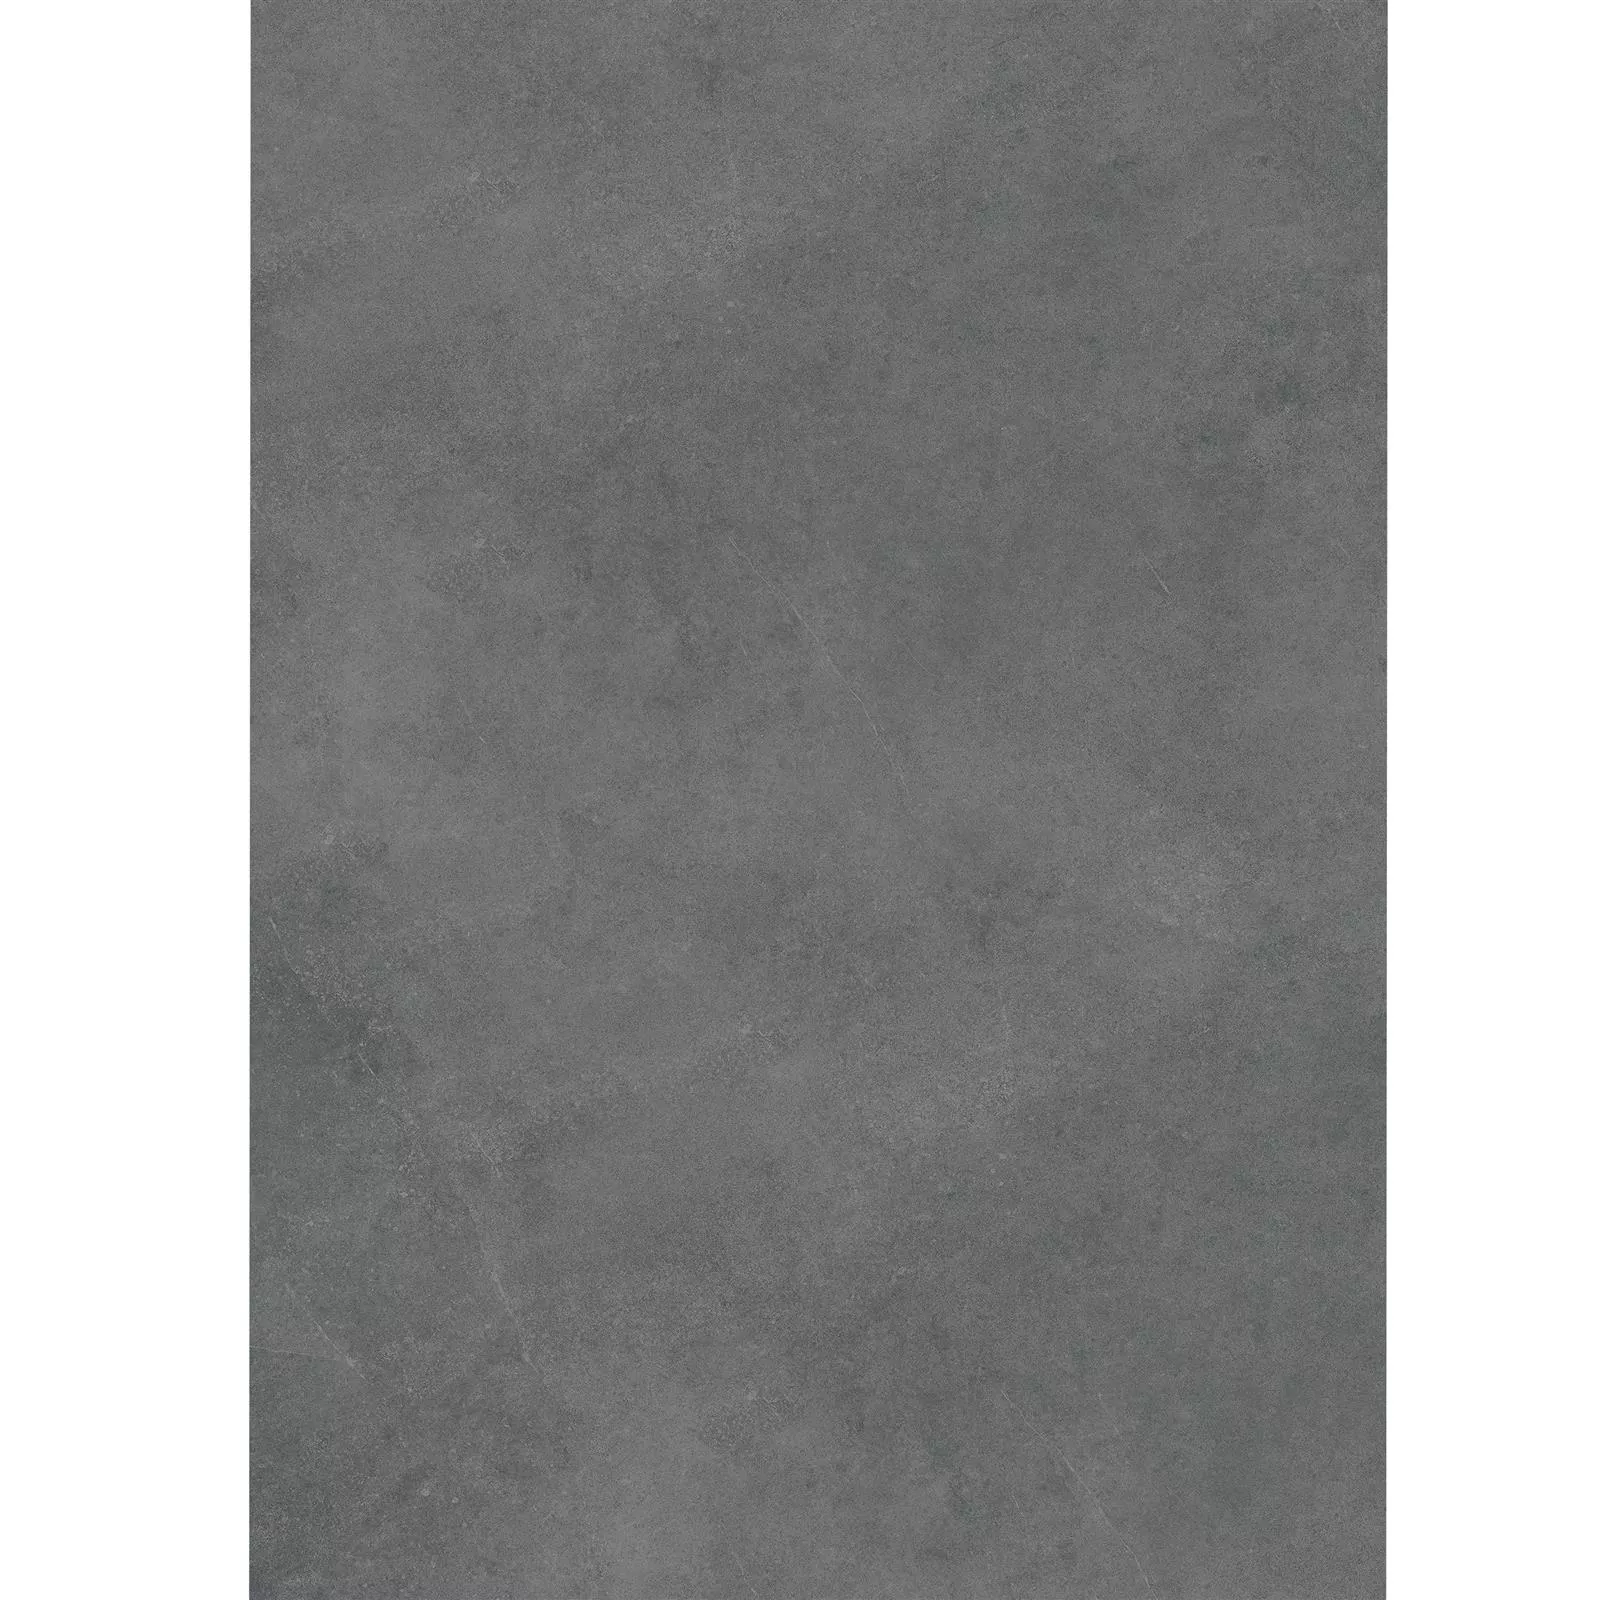 Sample Terrastegels Cement Optic Glinde Antraciet 60x120cm